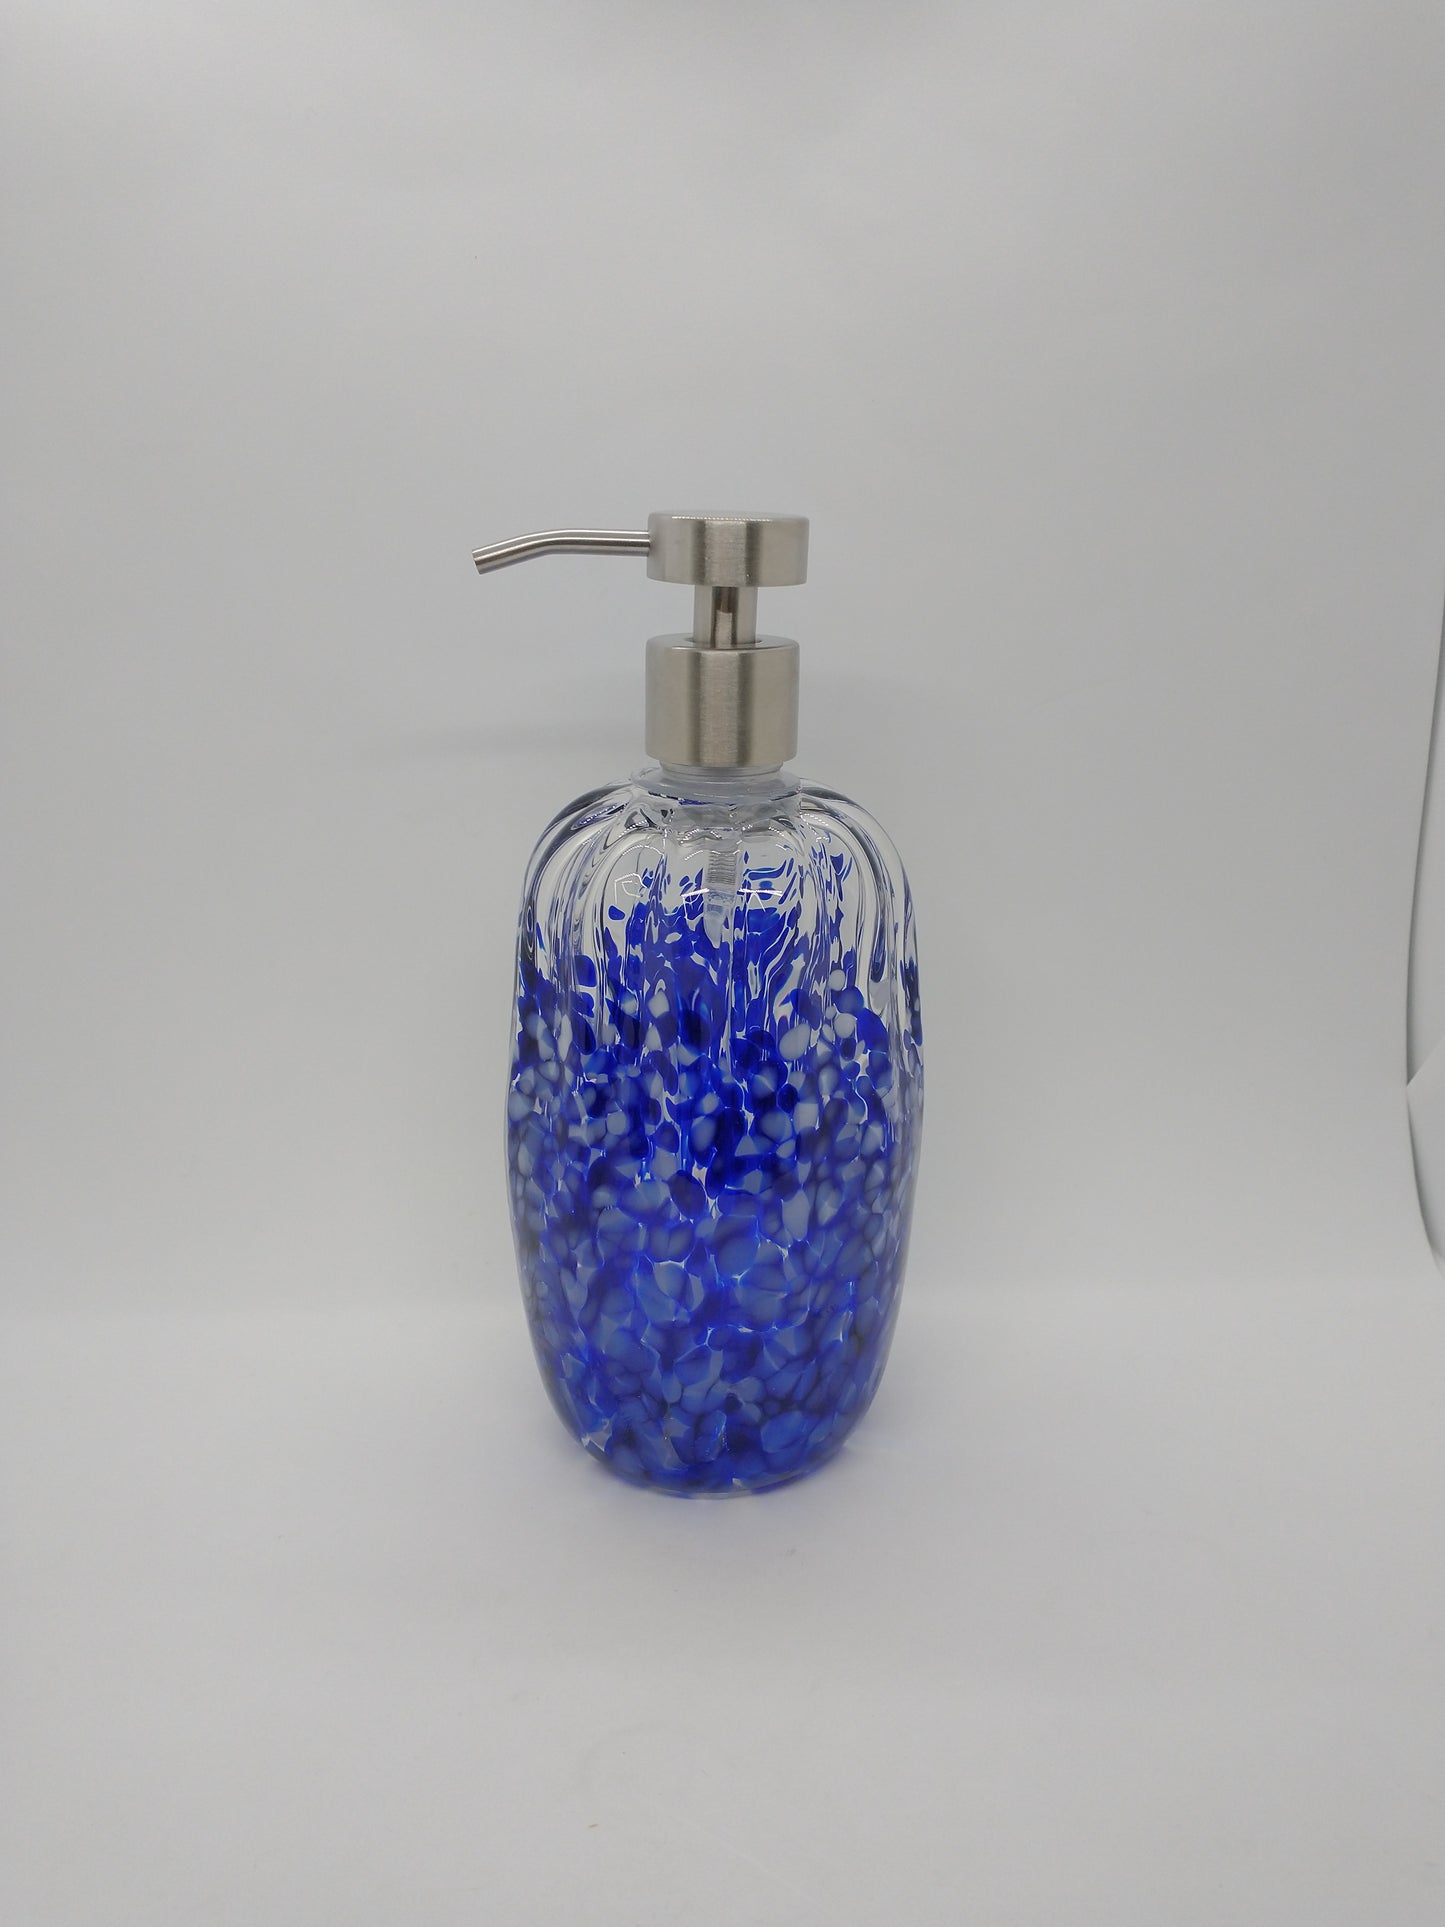 FOAMING Soap pump glass Soap dispenser hand blown glass soap pump dispenser kitchen bathroom liquid soap